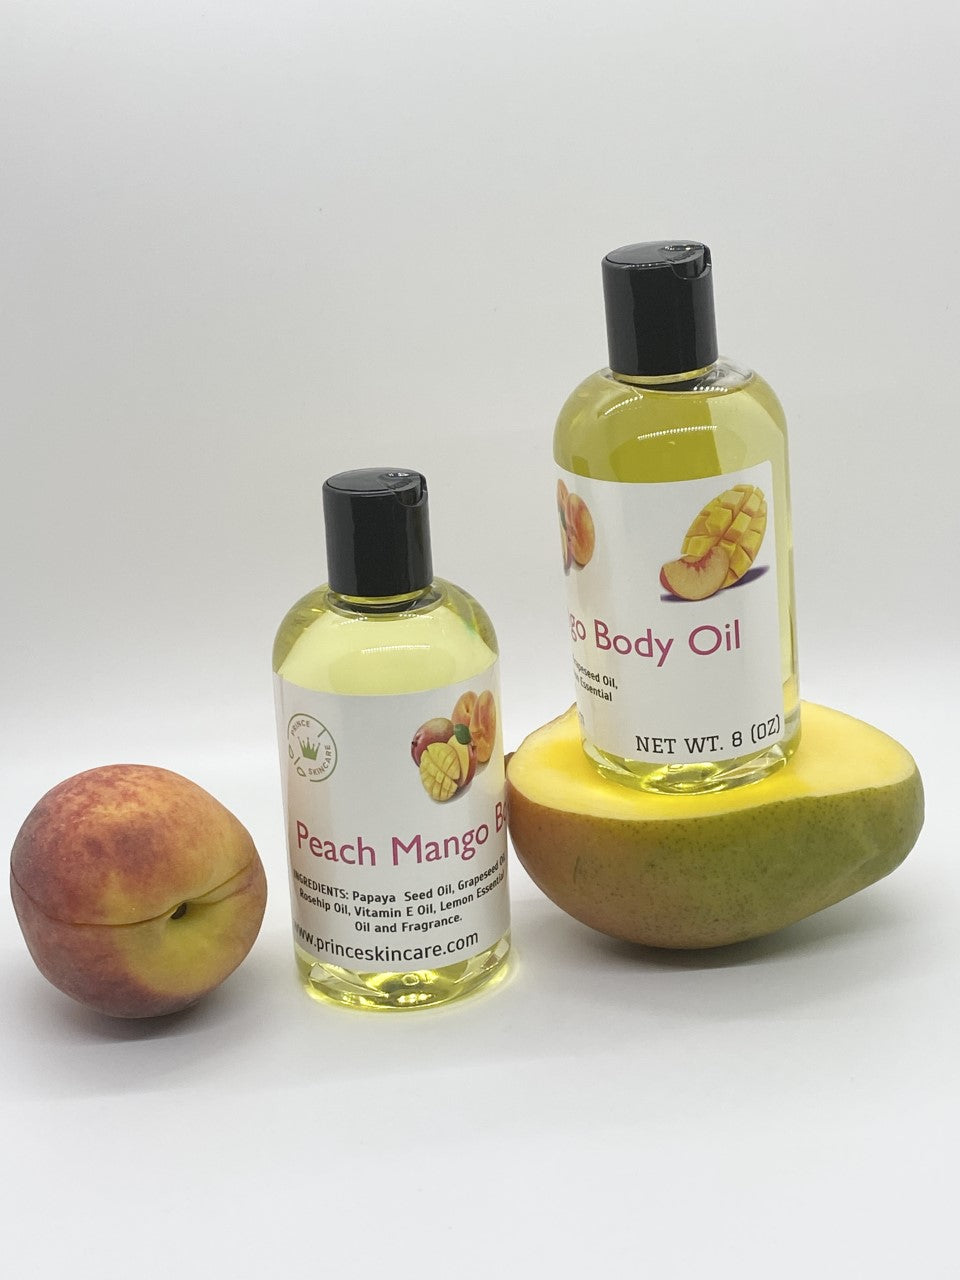 Peach Mango Body Oil